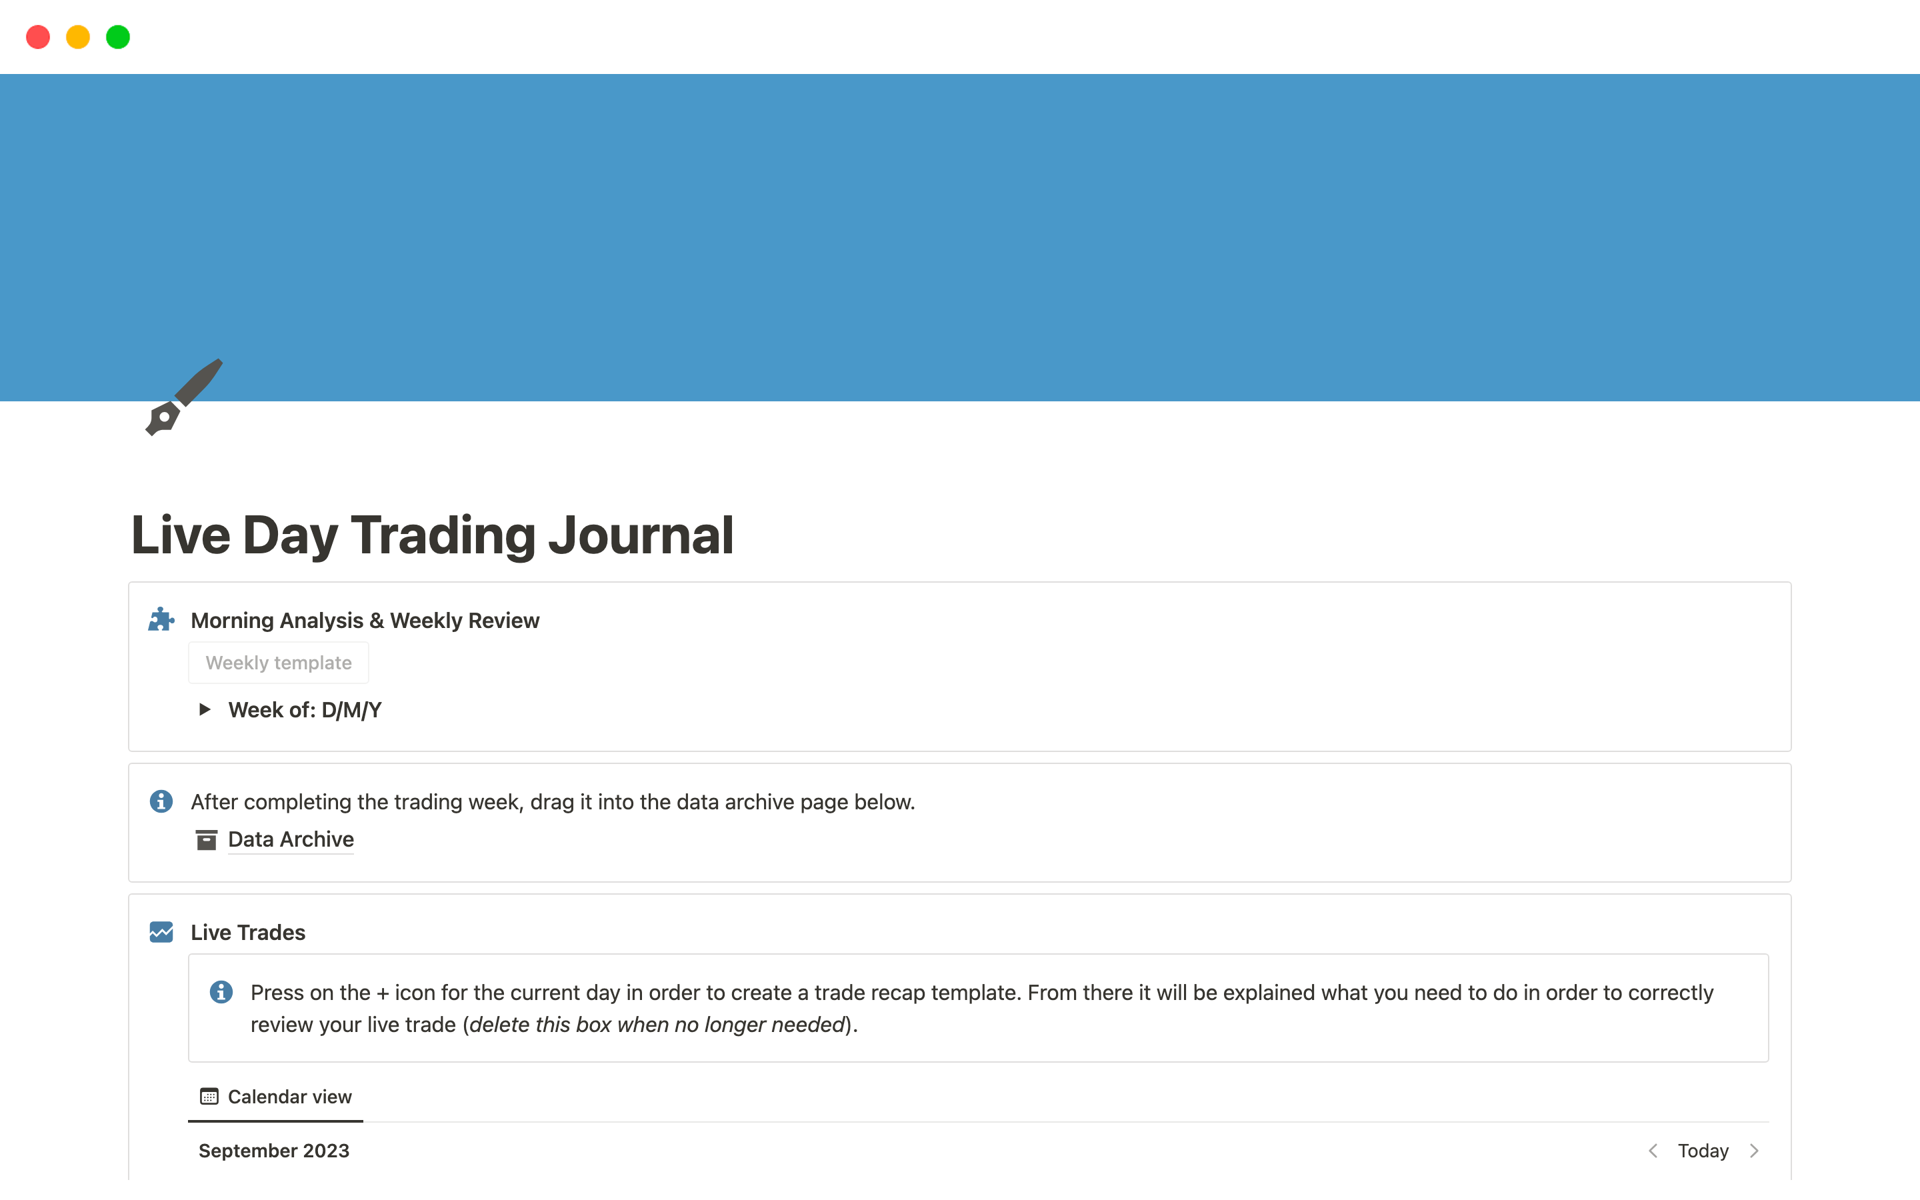 Vista previa de una plantilla para Live Day Trading Journal